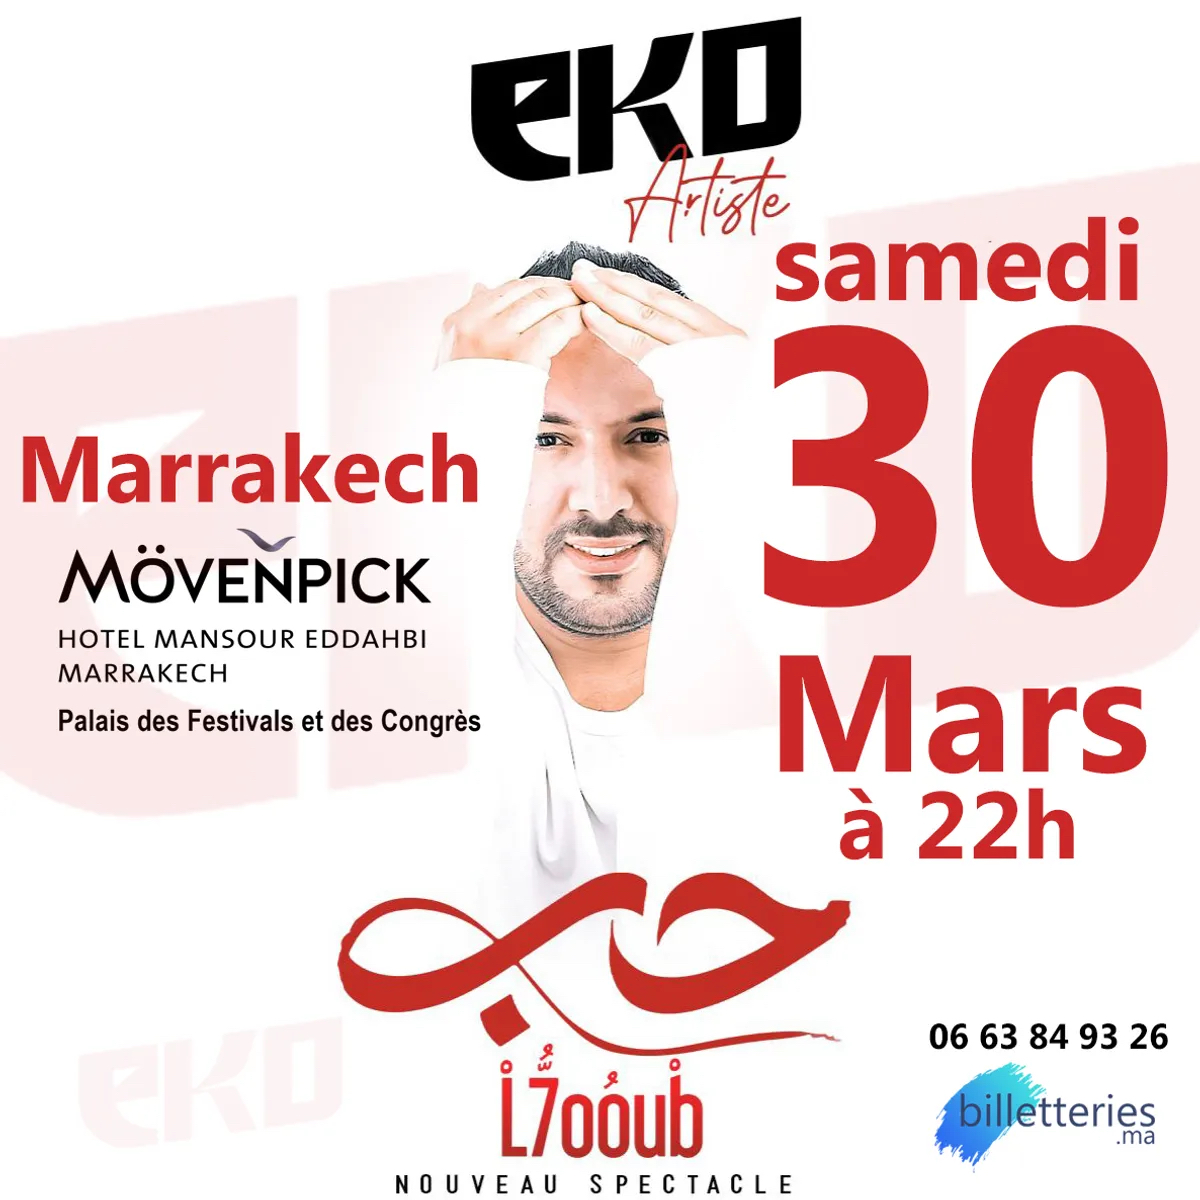 EKO, L'Humoriste Marocain, enflammera Marrakech avec son nouveau spectacle